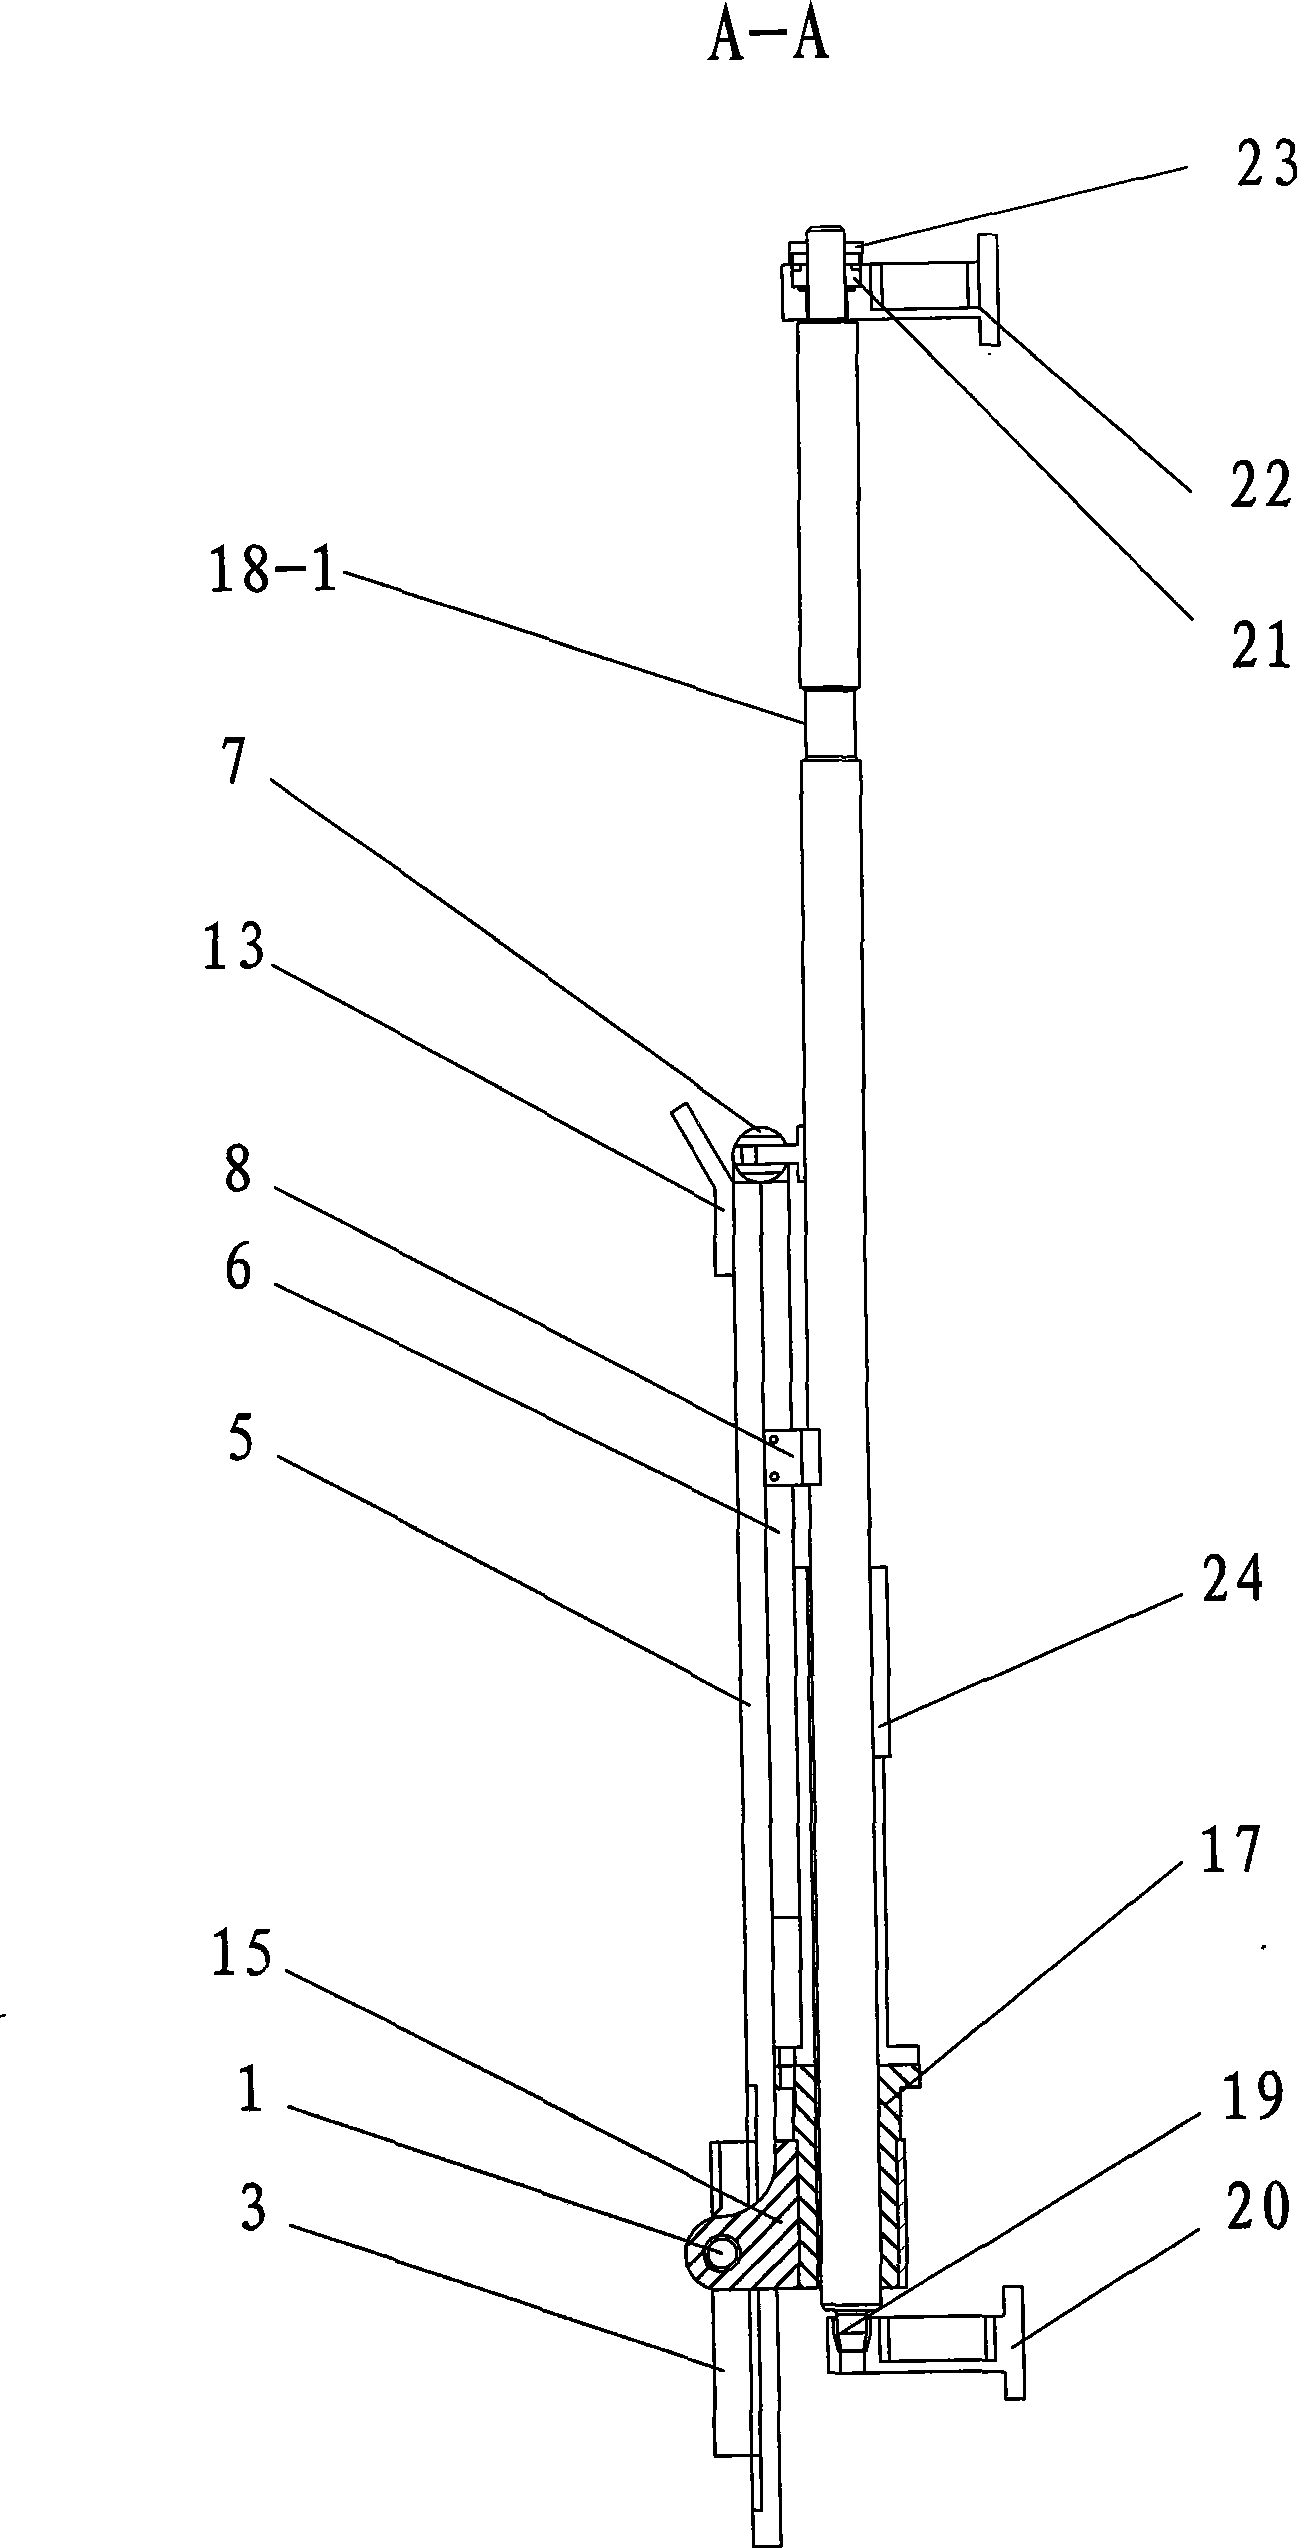 Lunar rover release mechanism of vertical elevating type